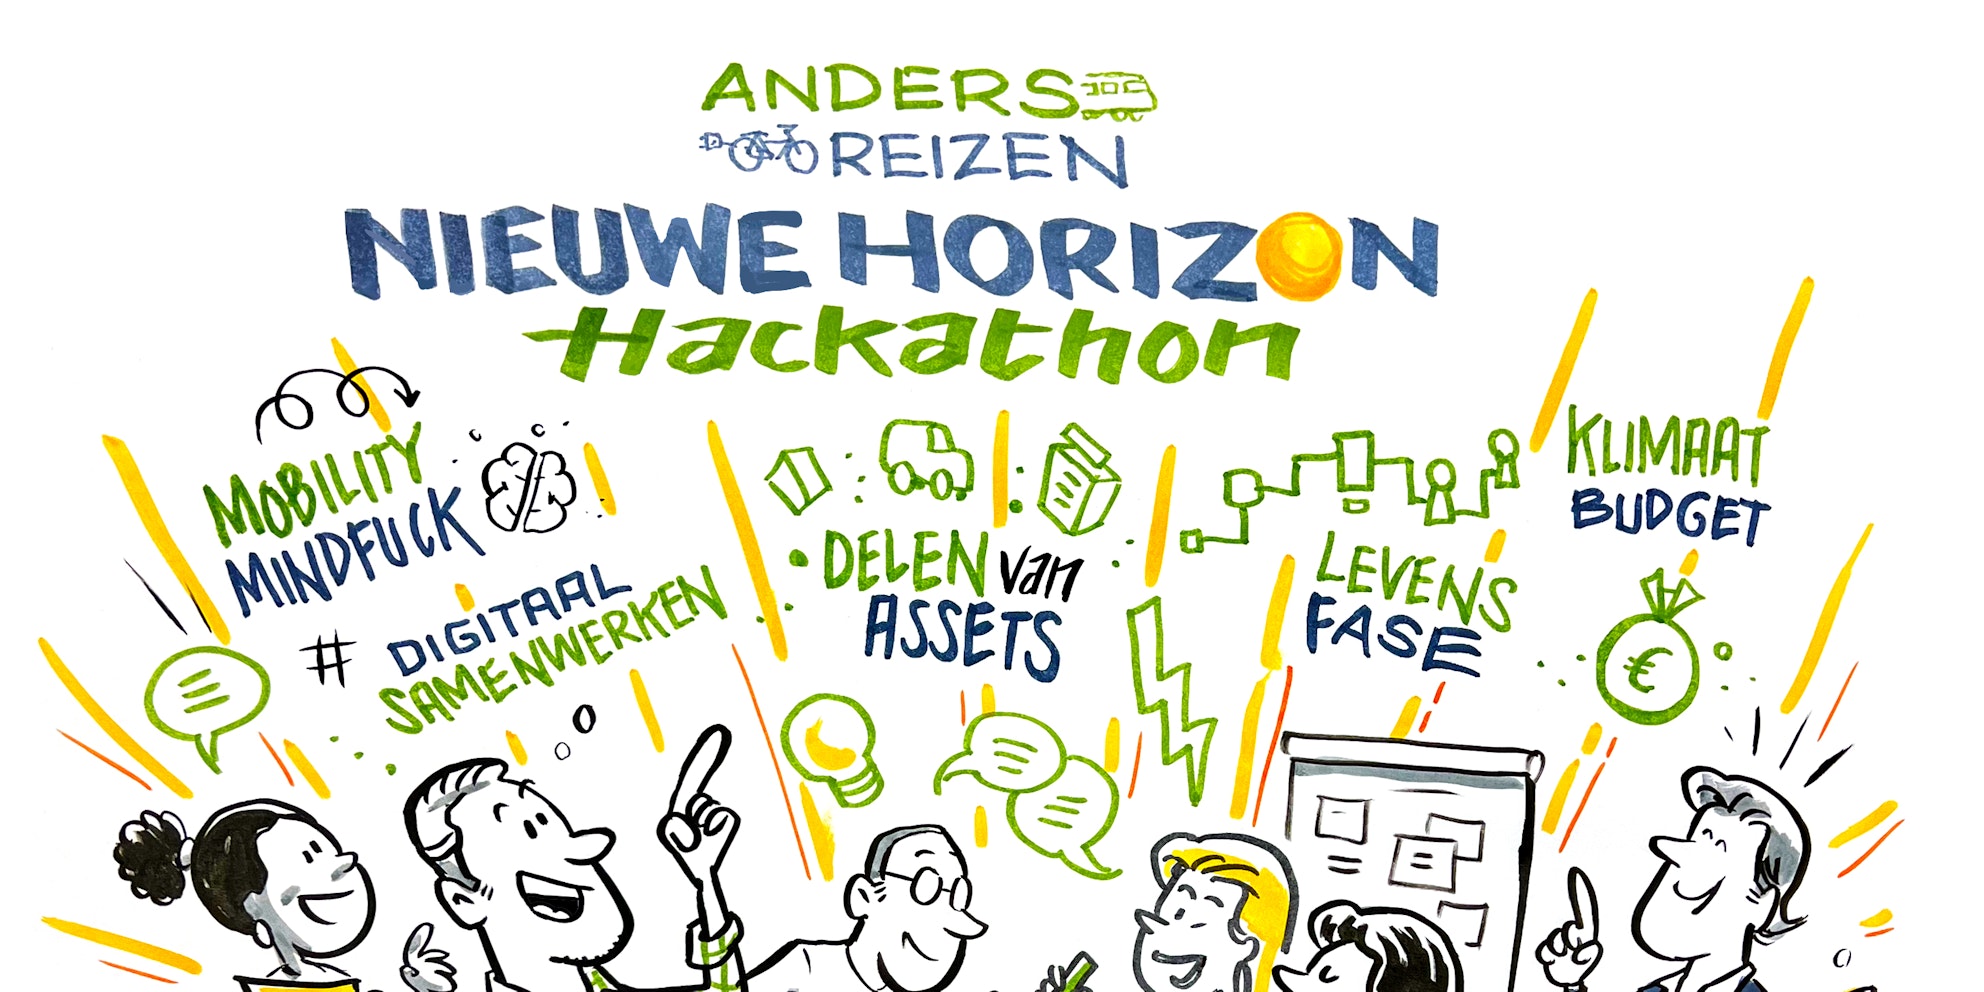 New Horizon - Hackathon